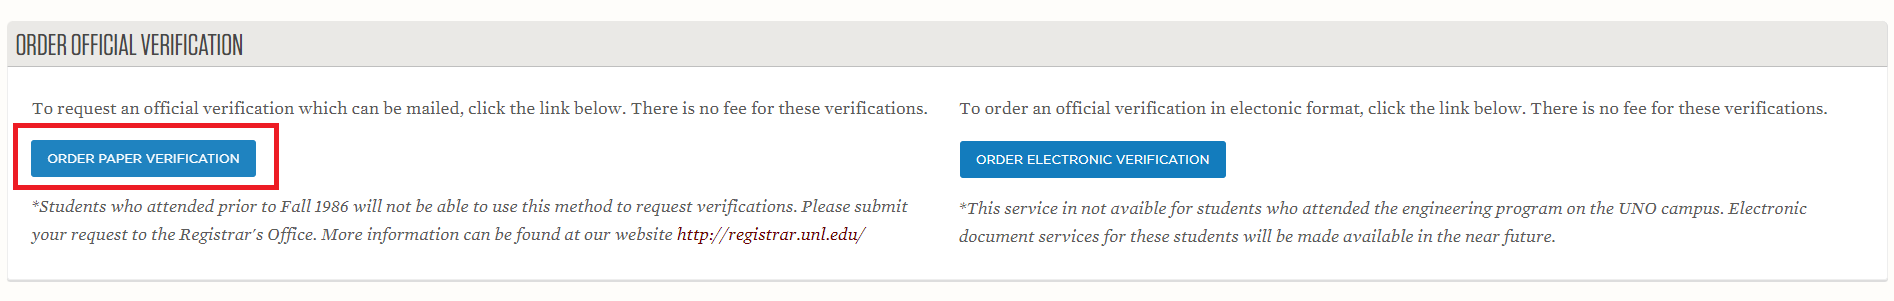 Order Paper Verification